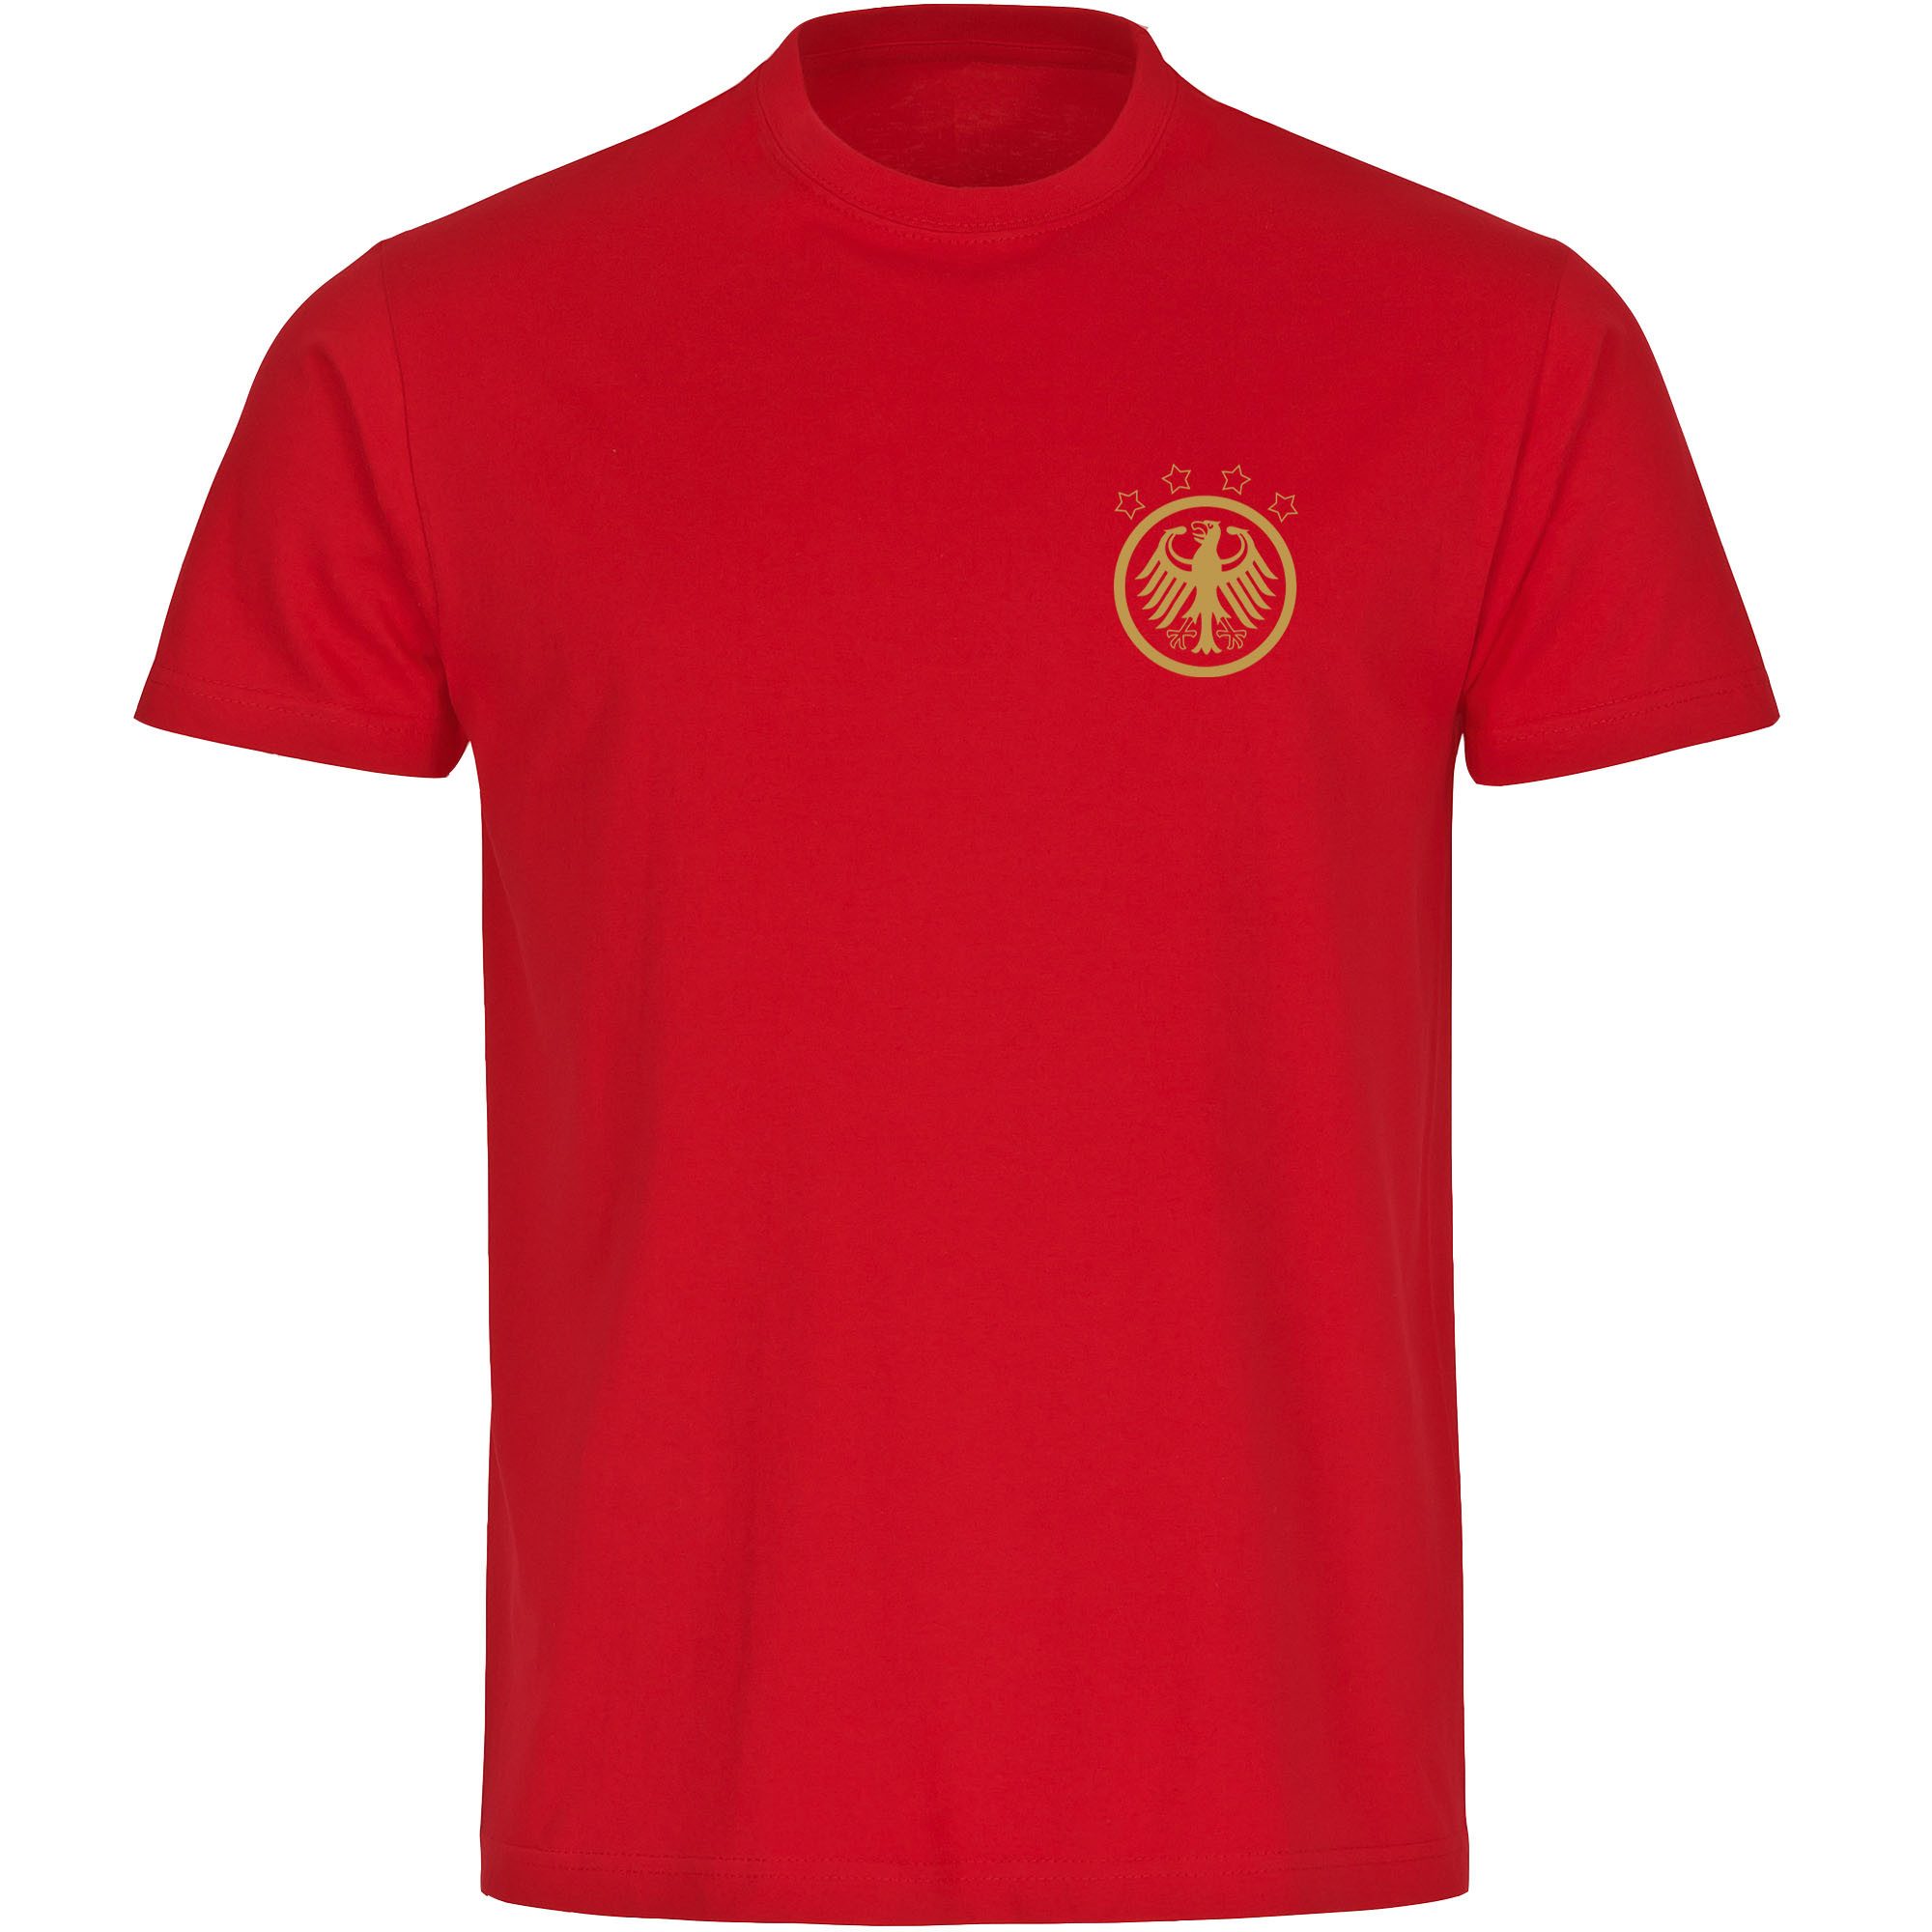 multifanshop T-Shirt Herren Germany - Adler Retro Gold - Männer